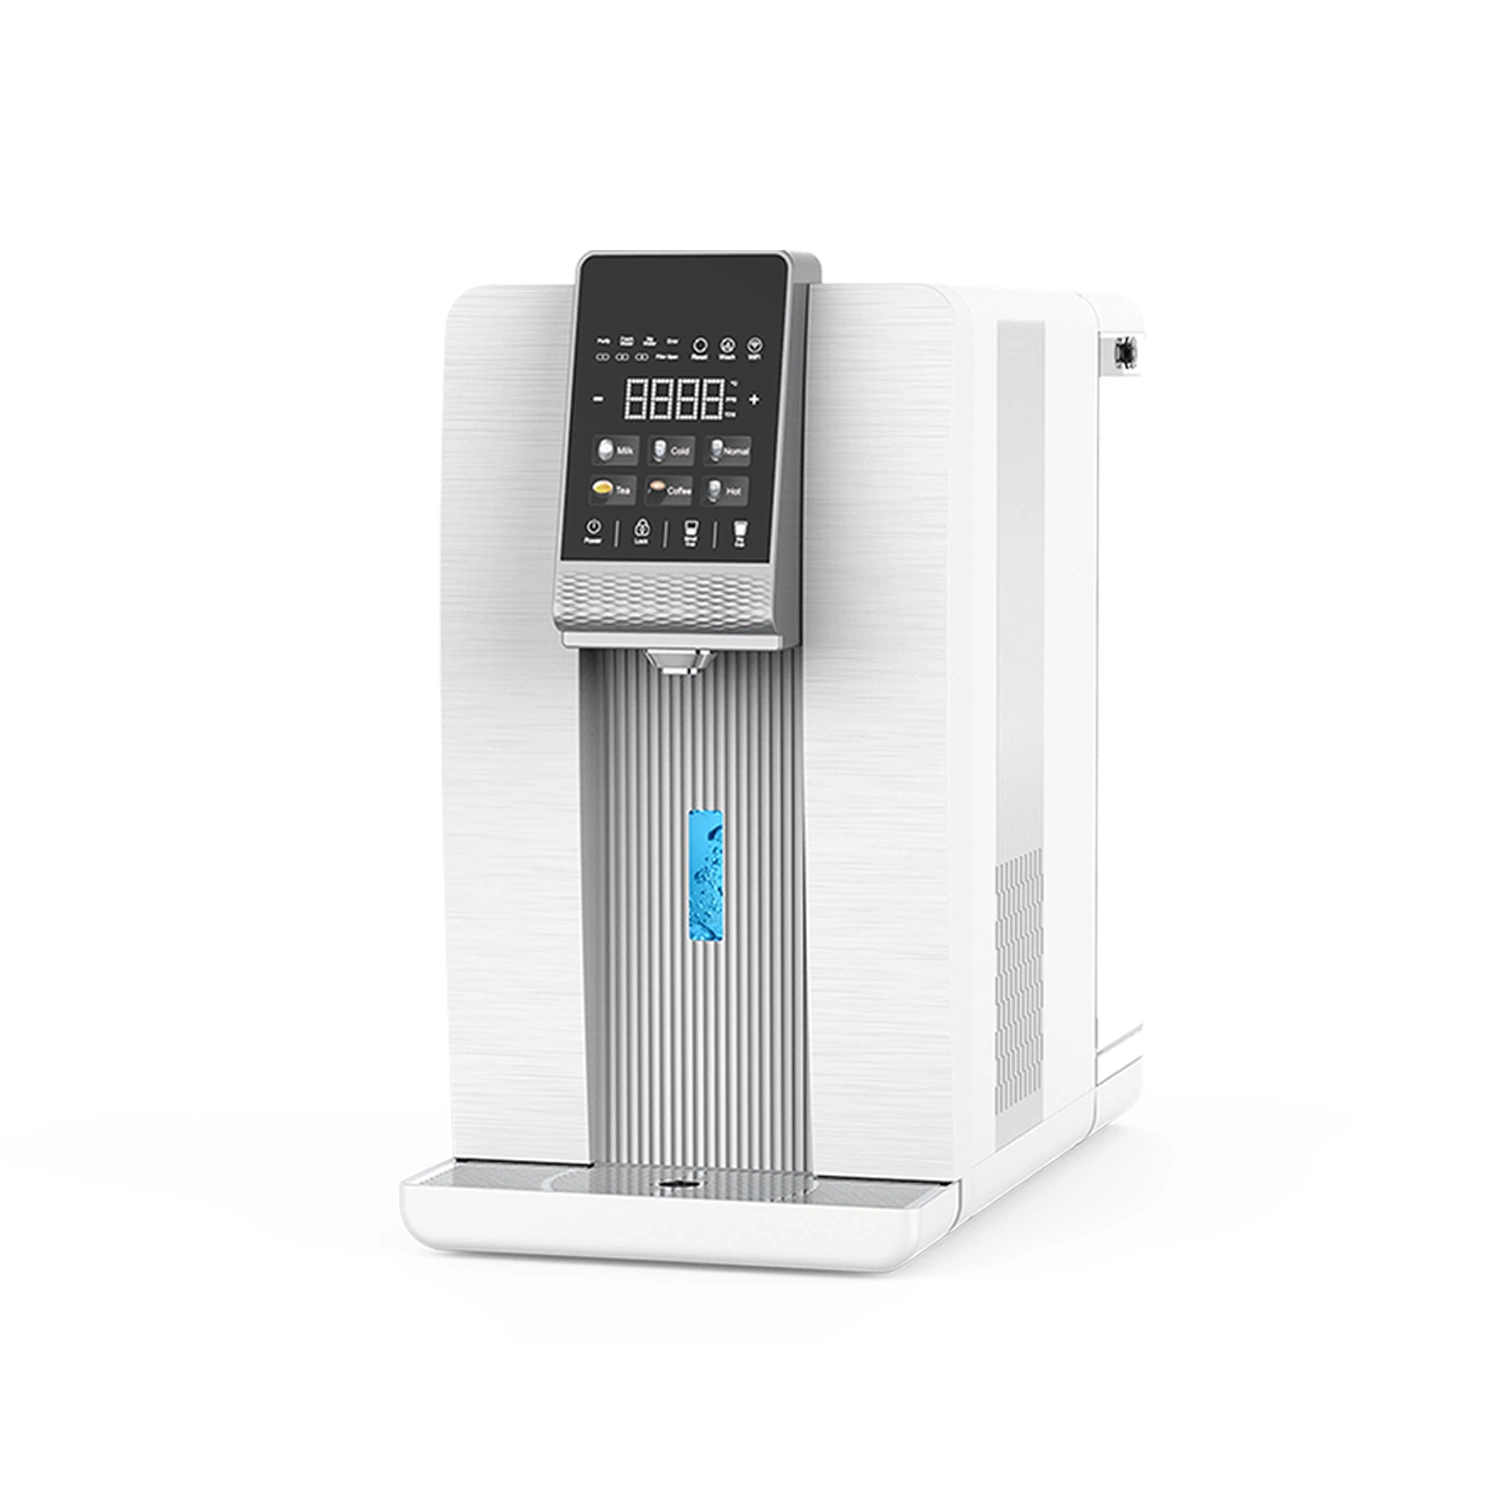 Olansi W20 Desktop Free Installation Hydrogen Water Machine RO Water Purifier Hot and Cold Water Dispenser